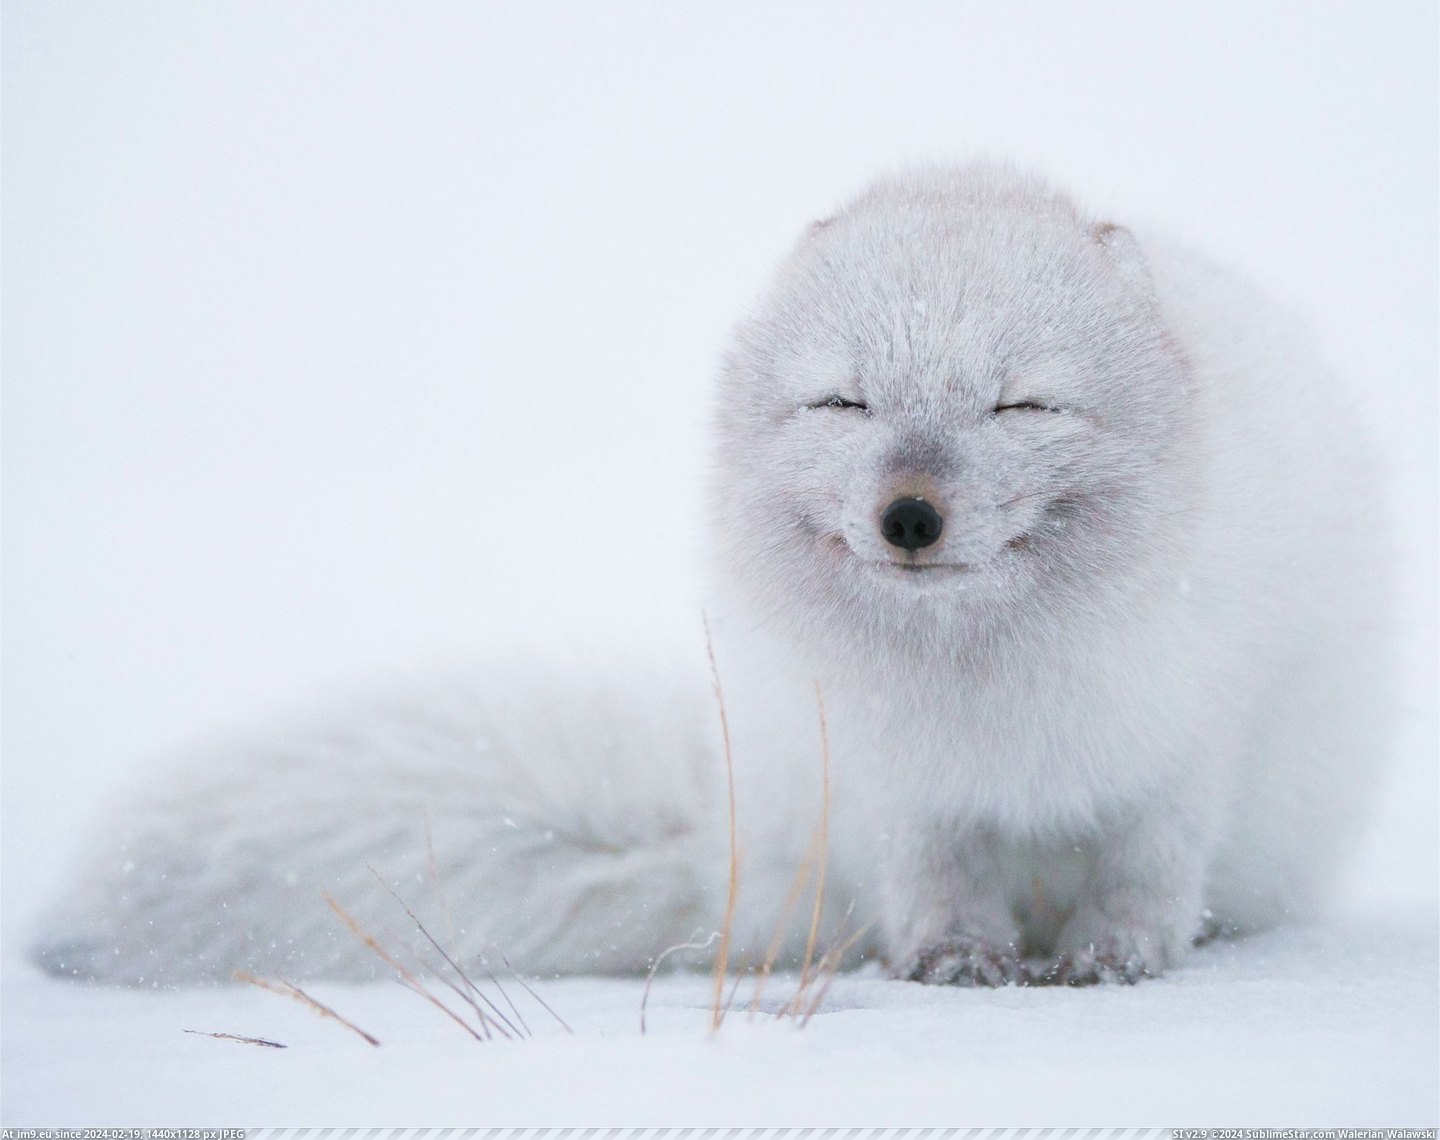 #White  #Fox [Aww] Little white fox Pic. (Изображение из альбом My r/AWW favs))